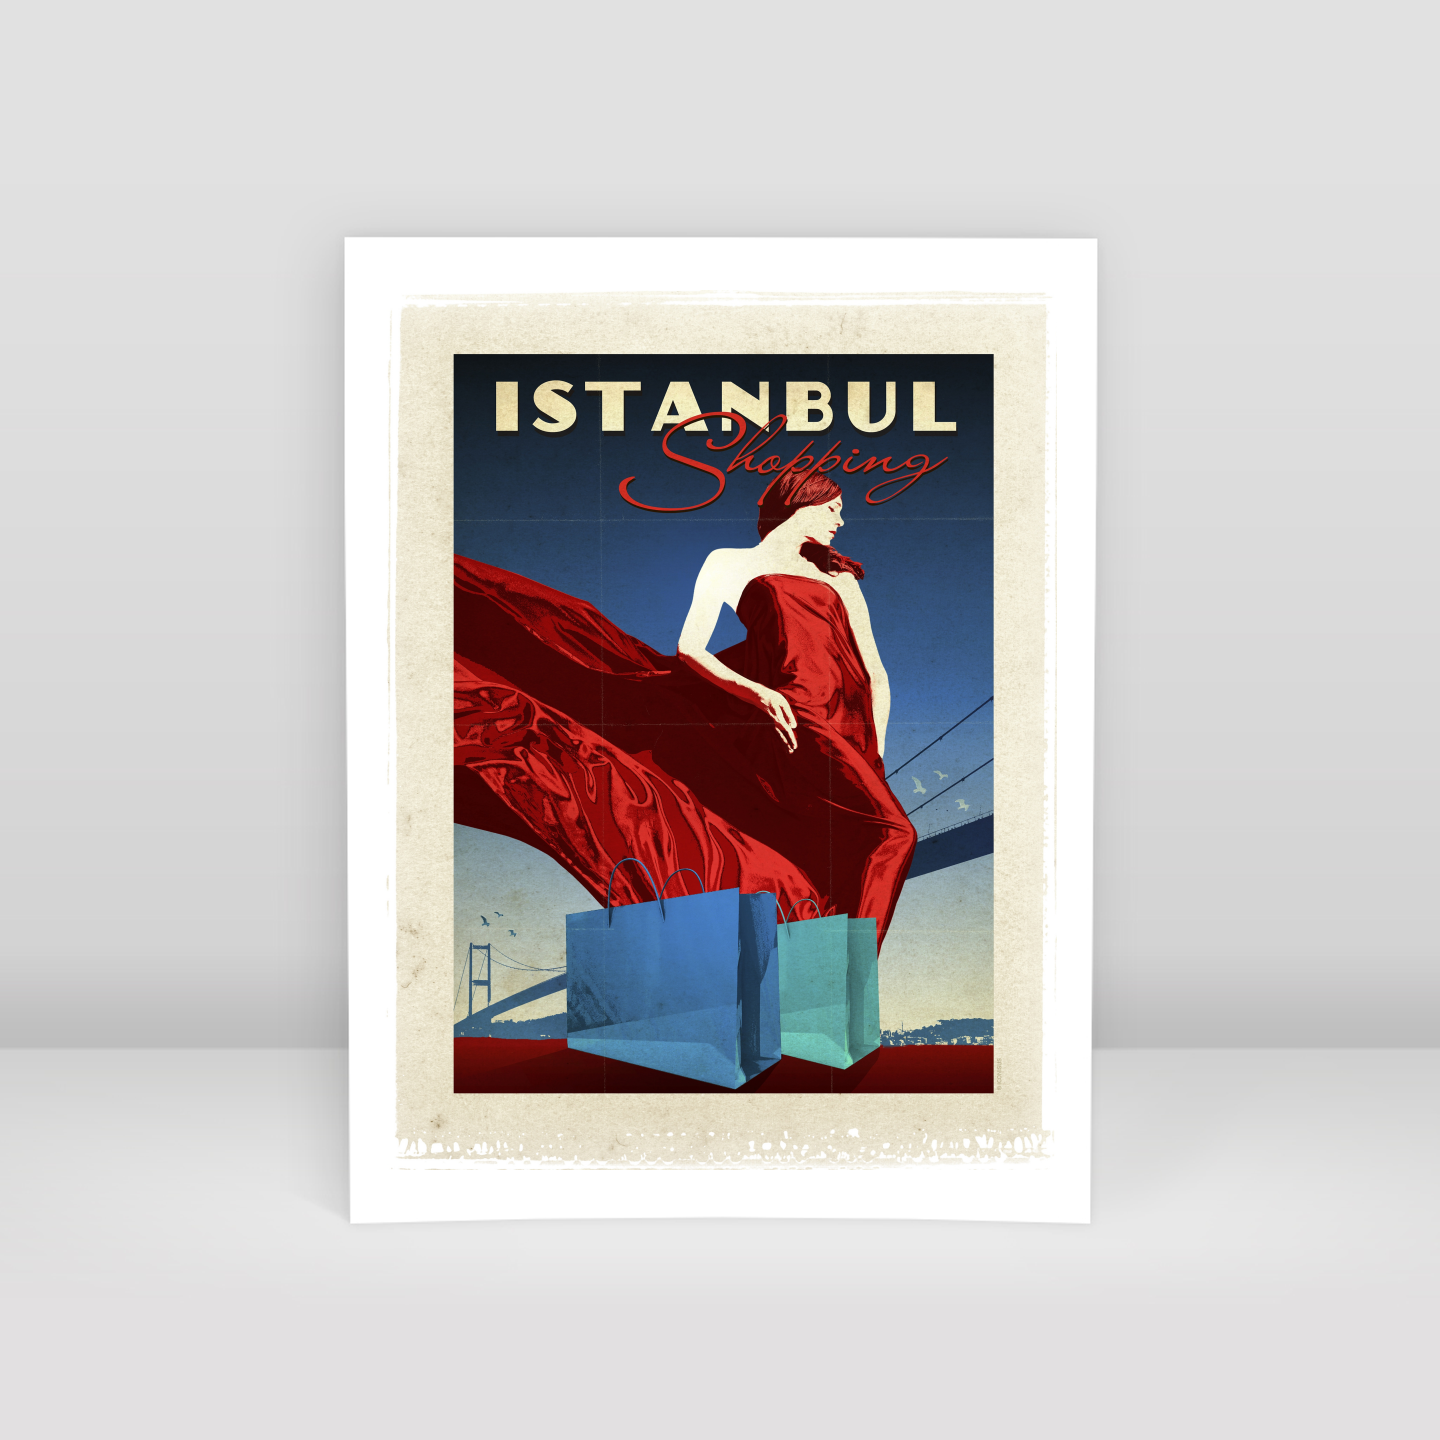 İstanbul Shopping - Art Print